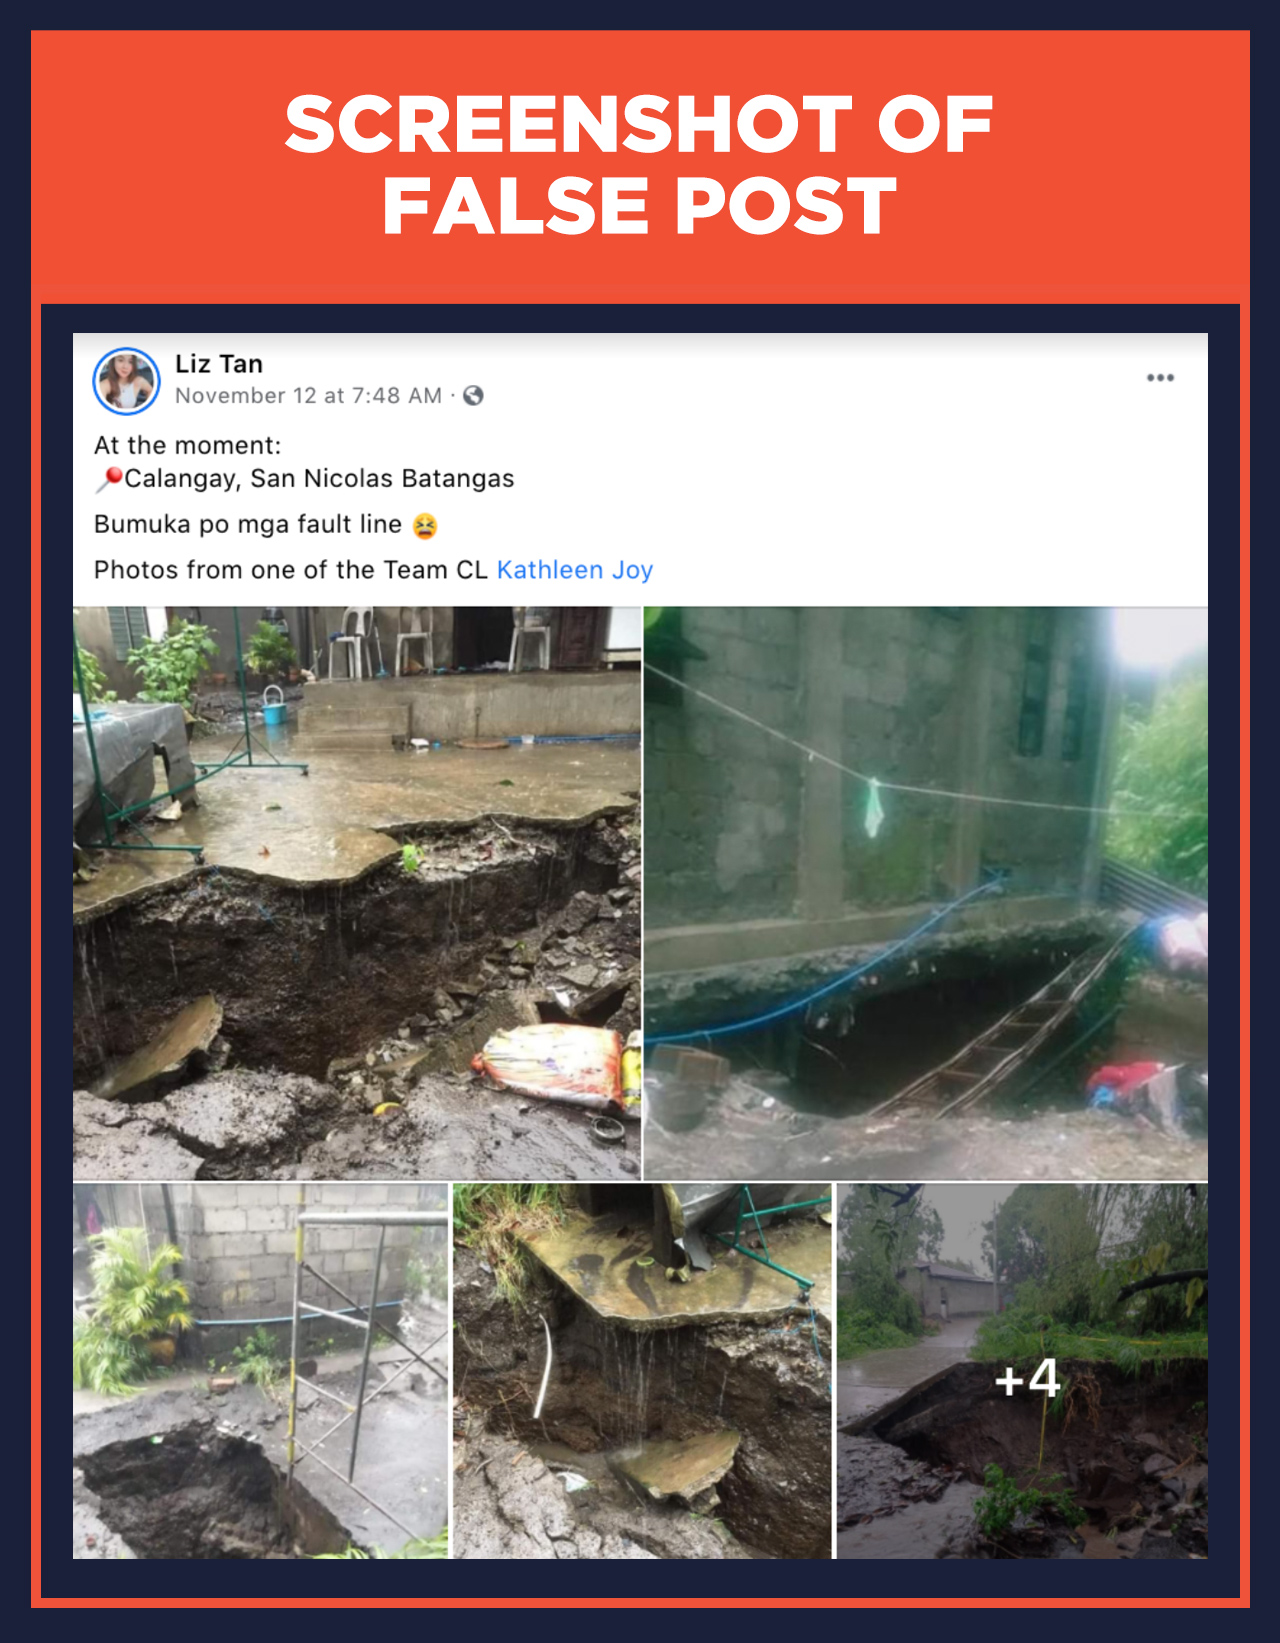 FALSE POST Photos show fault line in Batangas